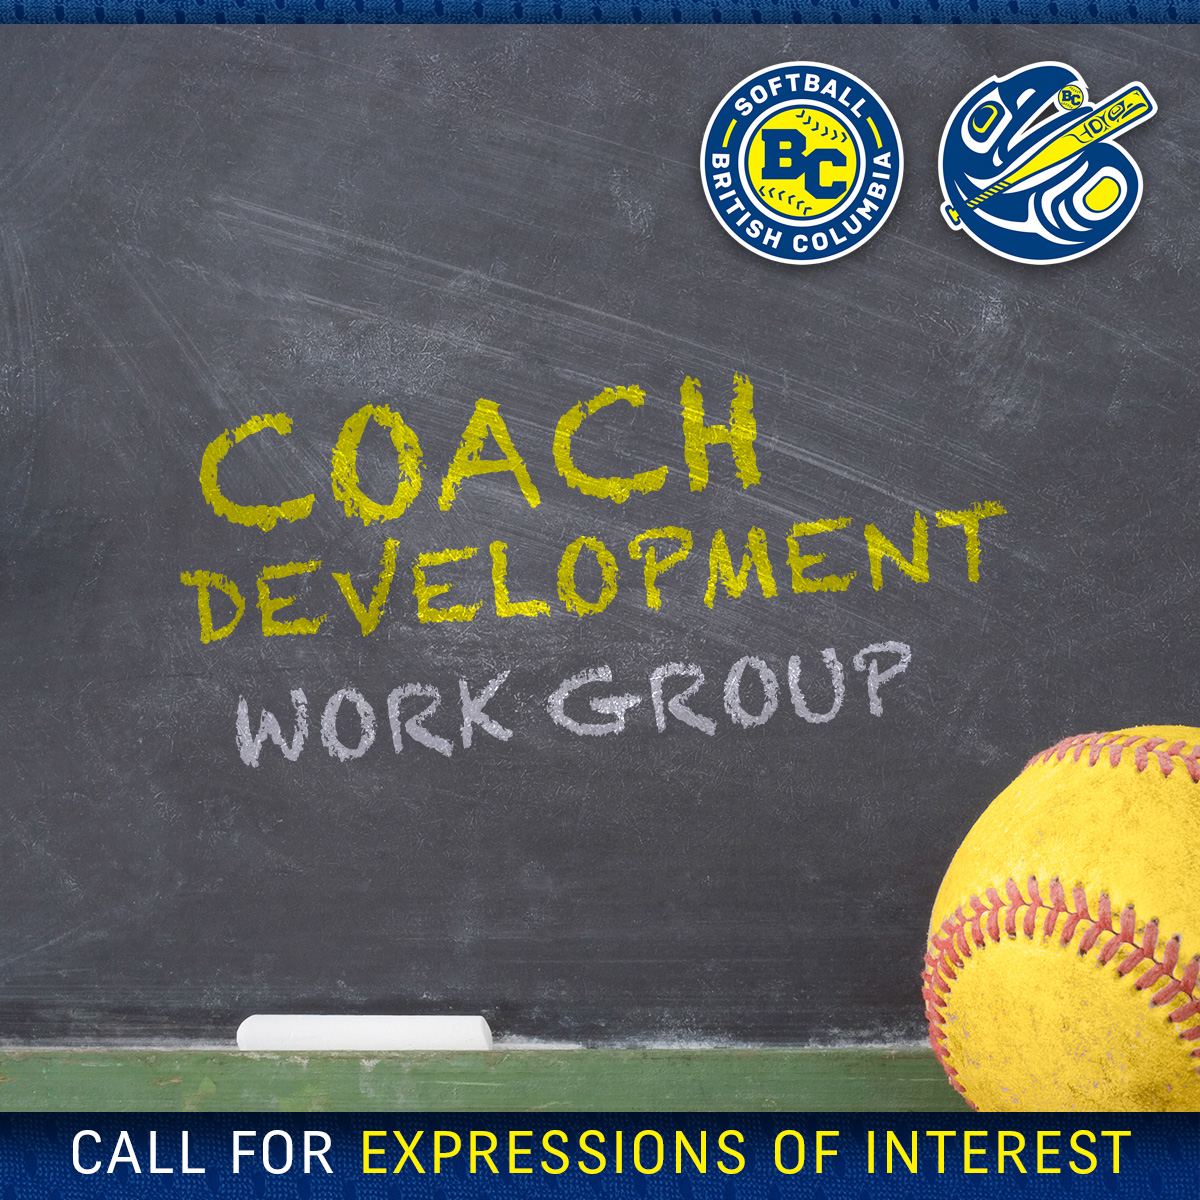 Coach Development Work Group. Expression of Interest